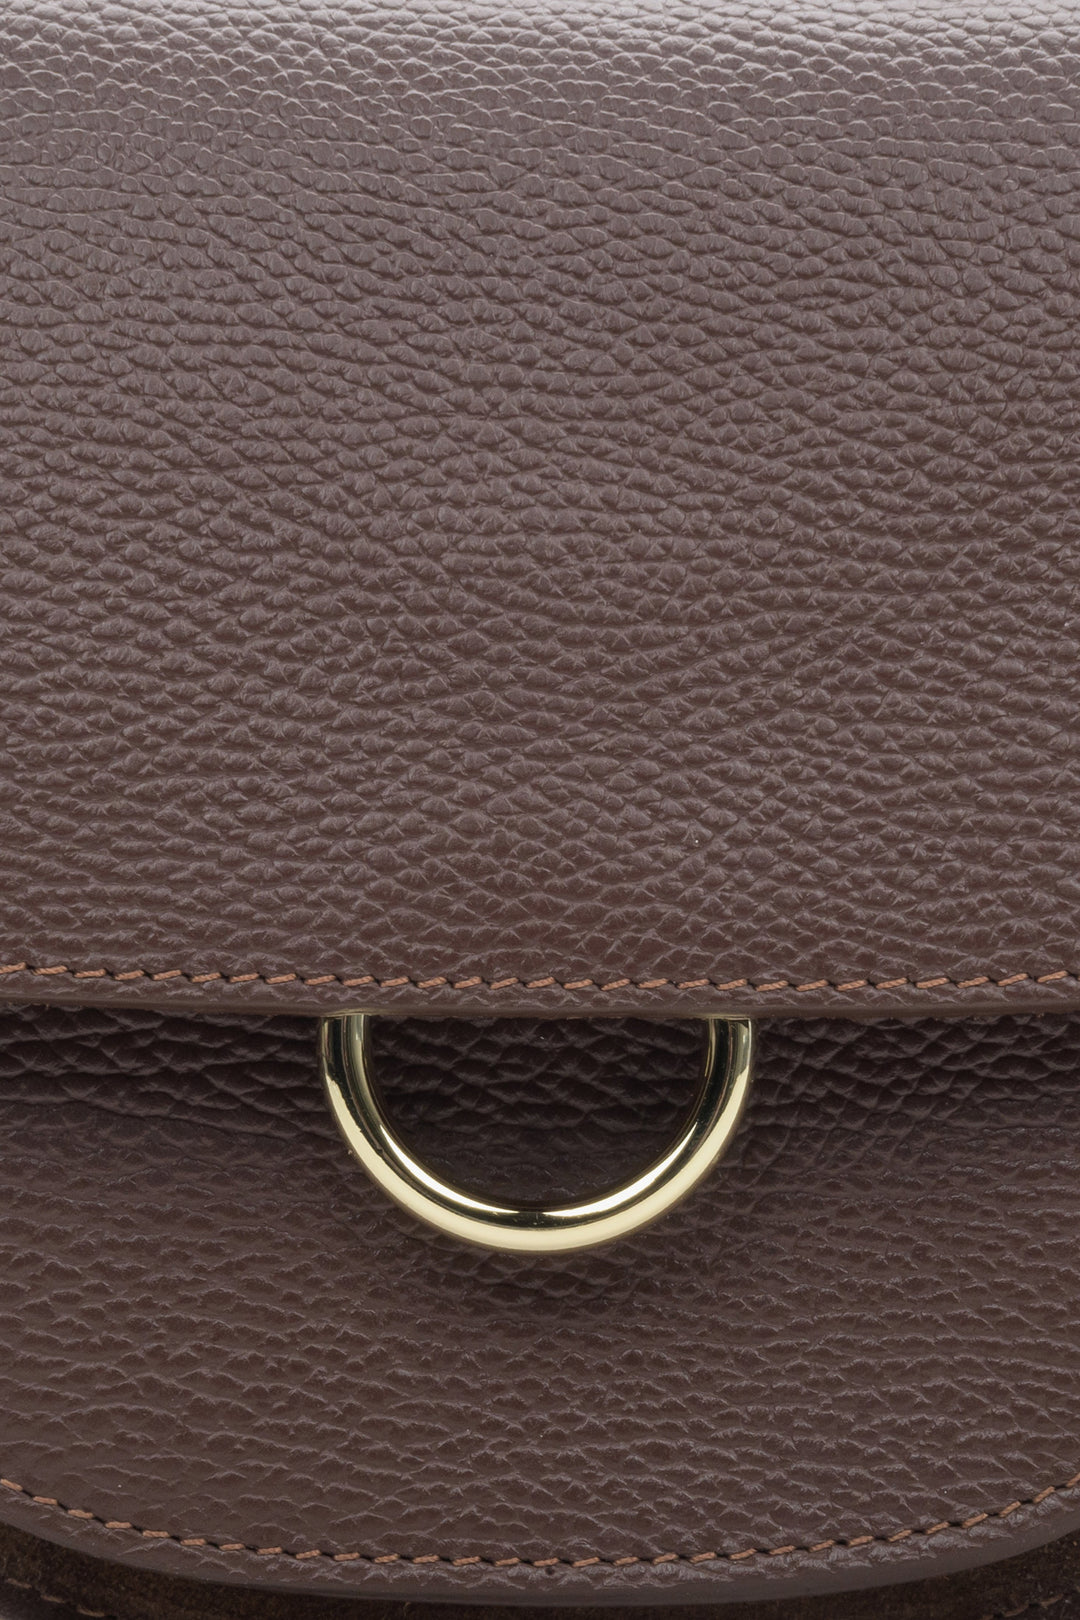 Small Italian leather  saddle brown crossbody women's bag.